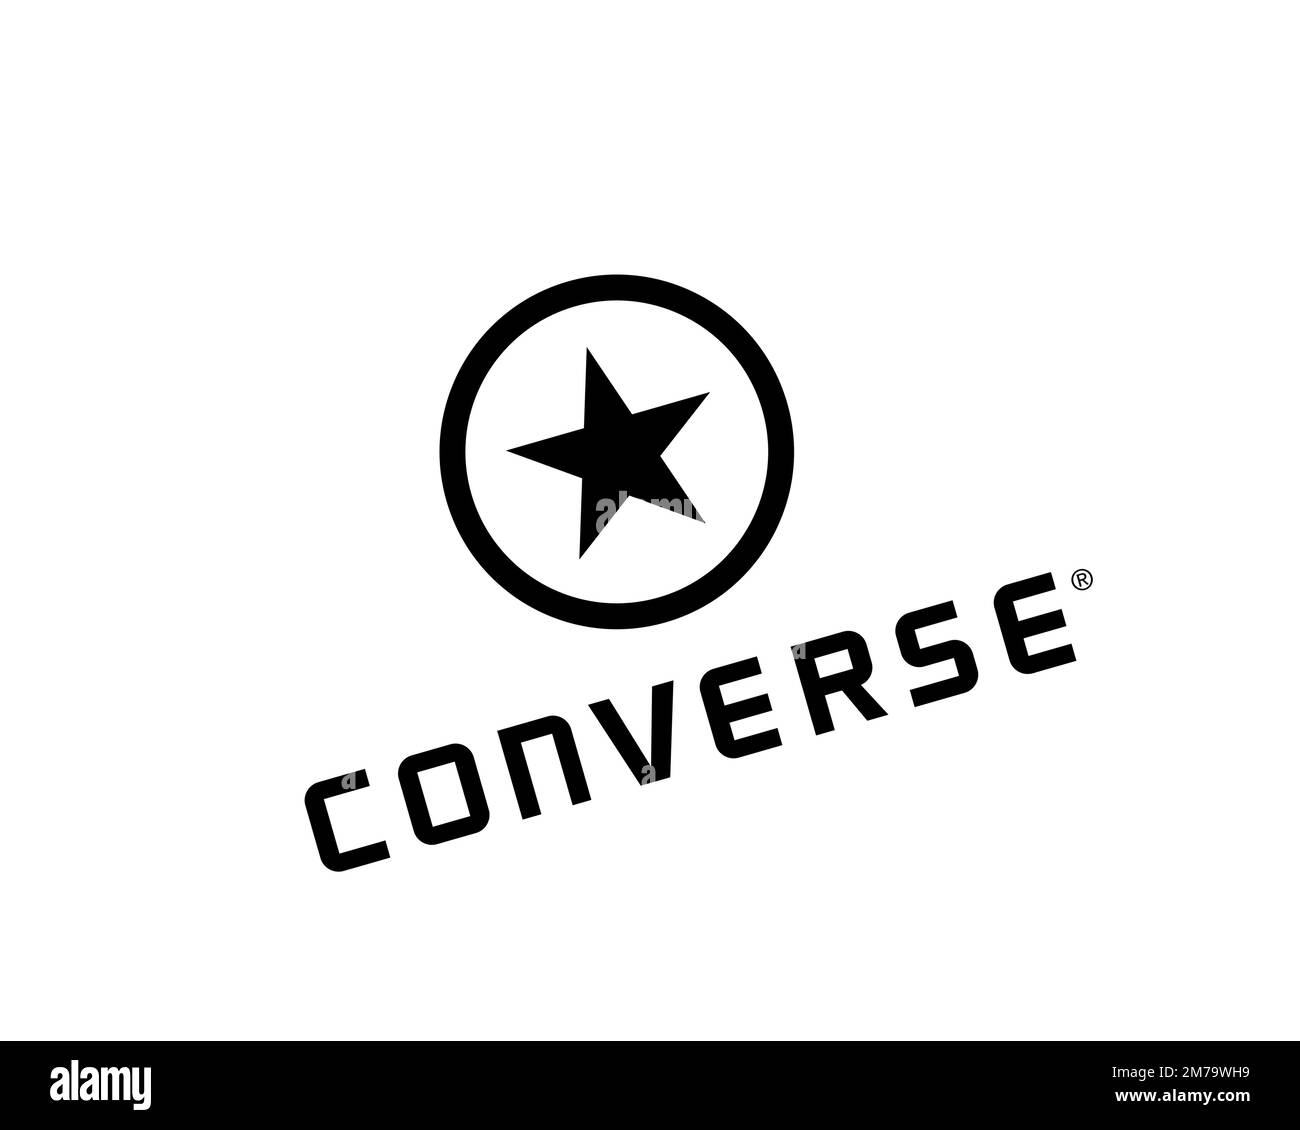 Converse shoe company, rotated logo, white background Stock Photo